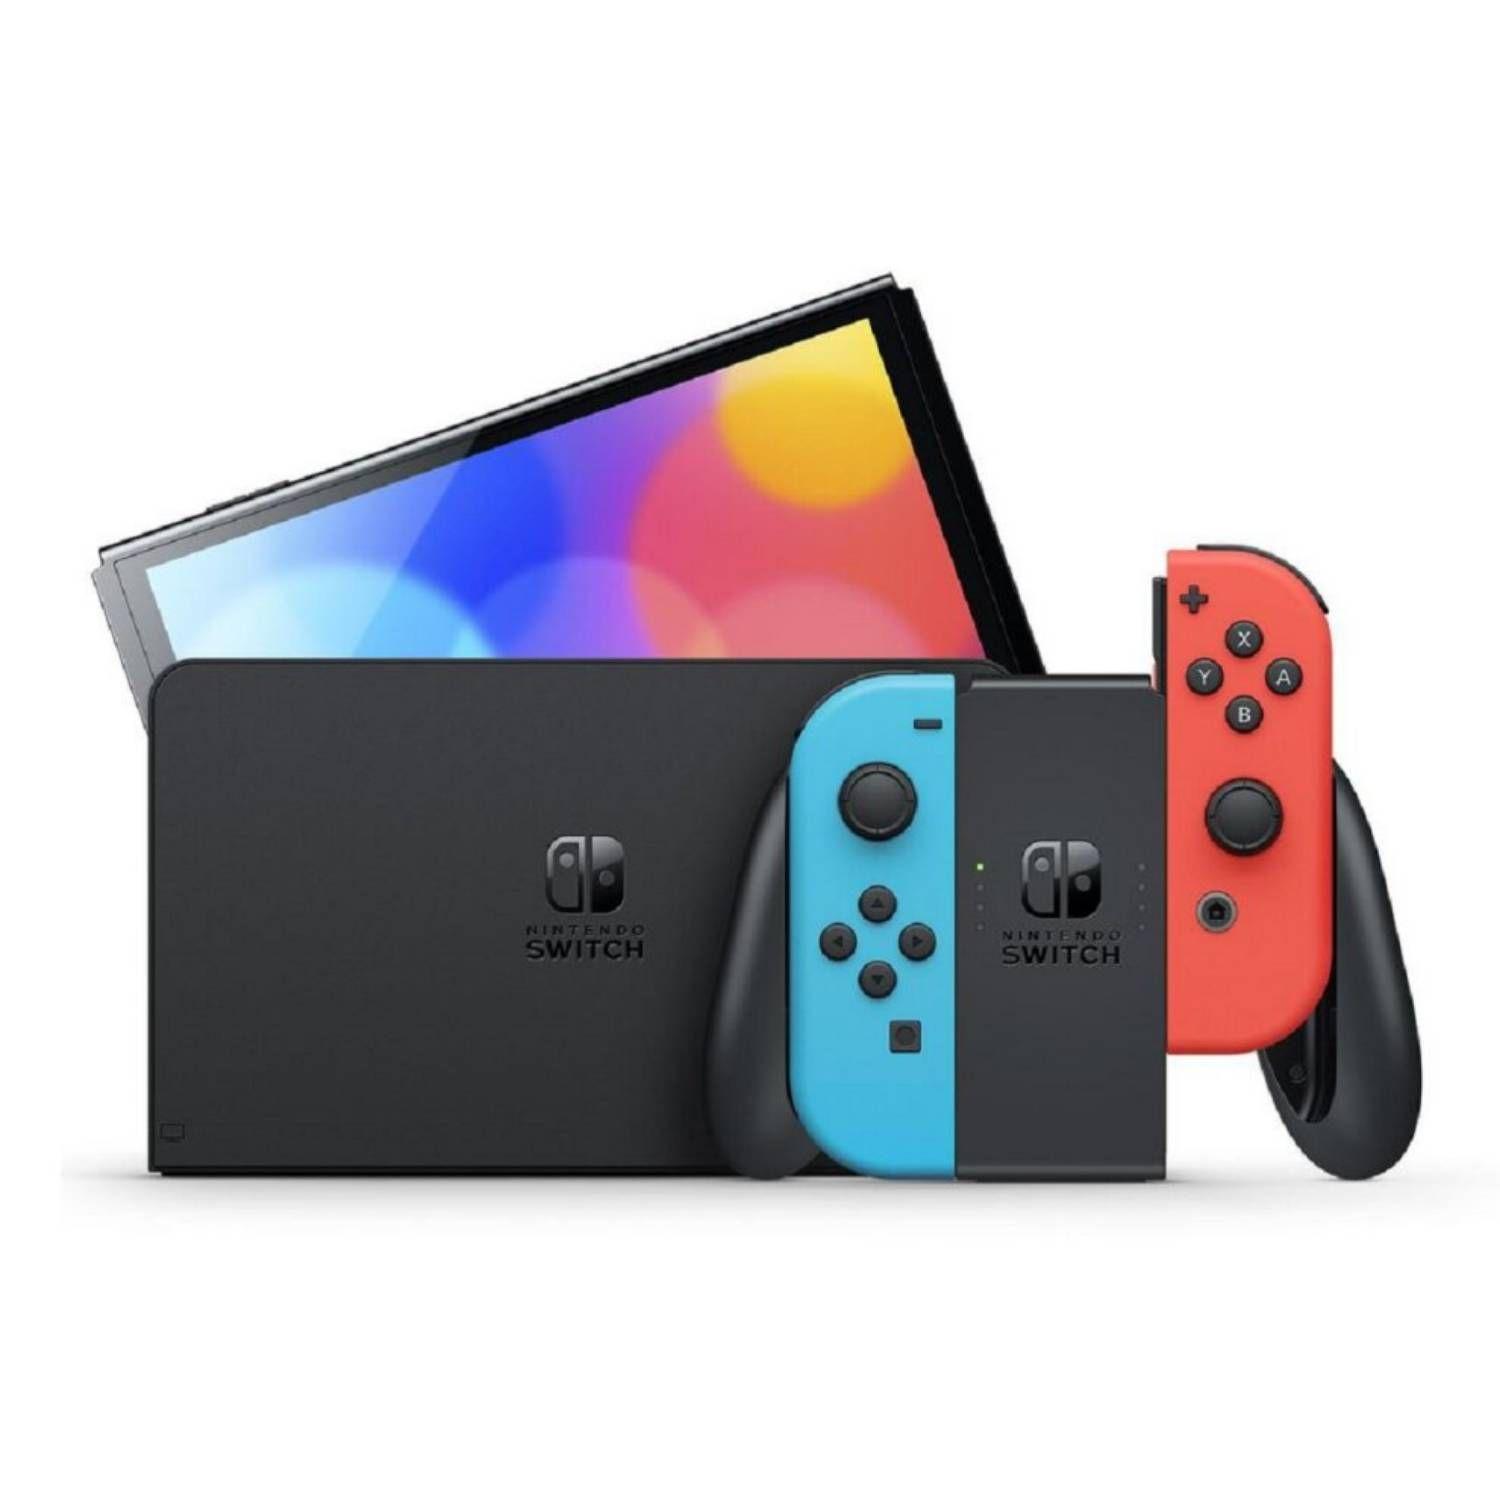 Console Nintendo Switch OLED Bleu néon, Noir, Rouge fluo | Rakuten